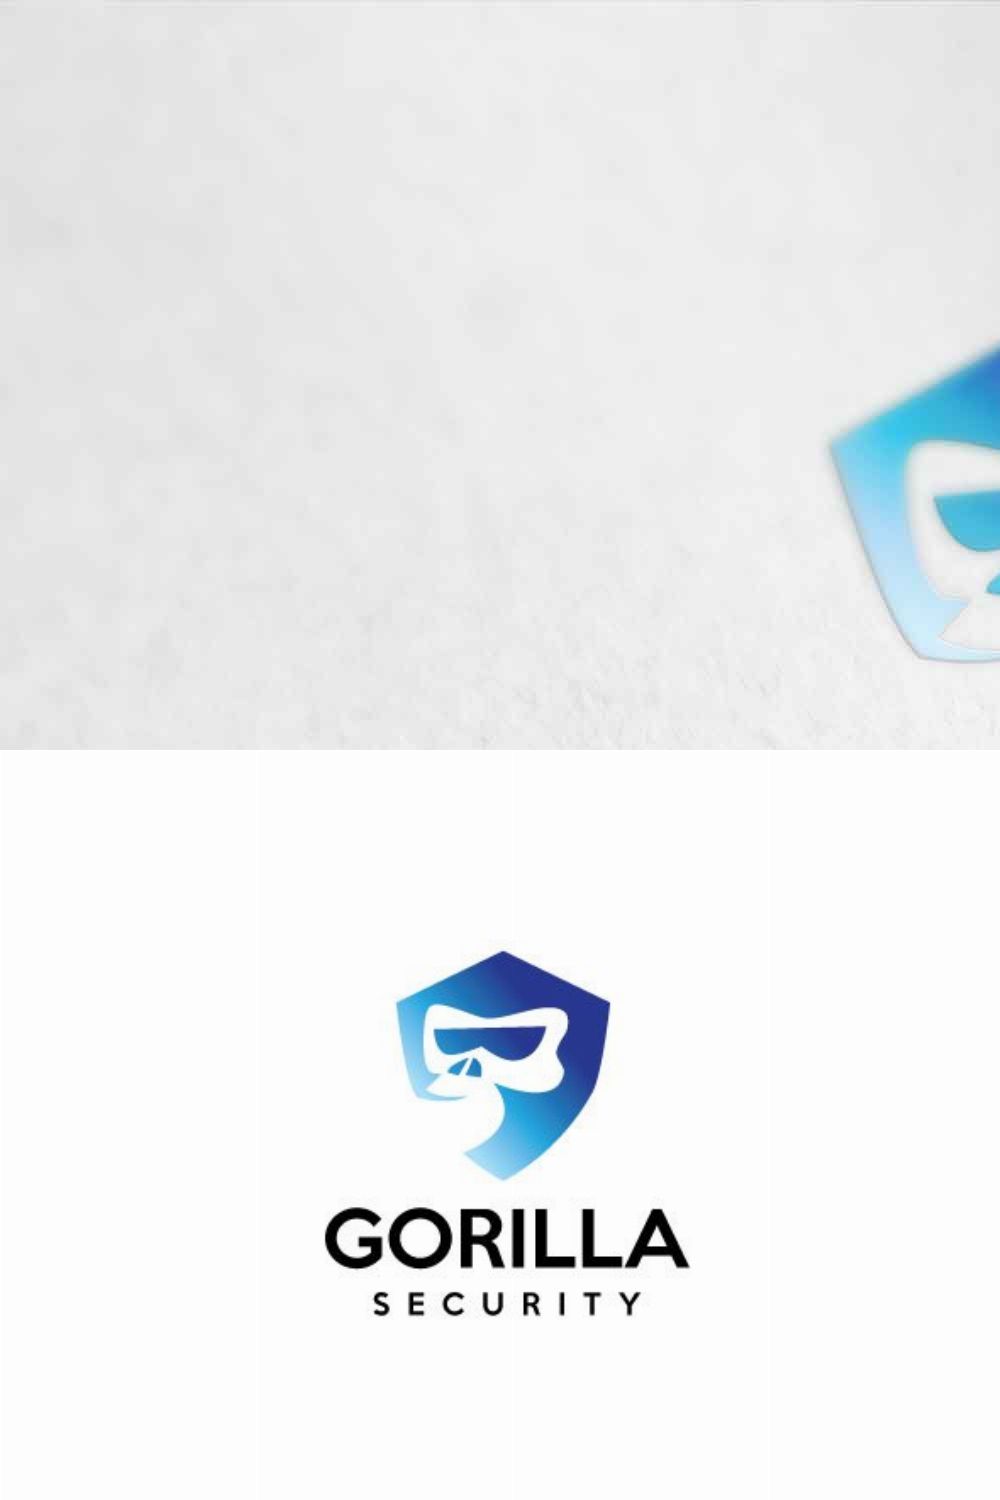 Security Gorilla Logo pinterest preview image.